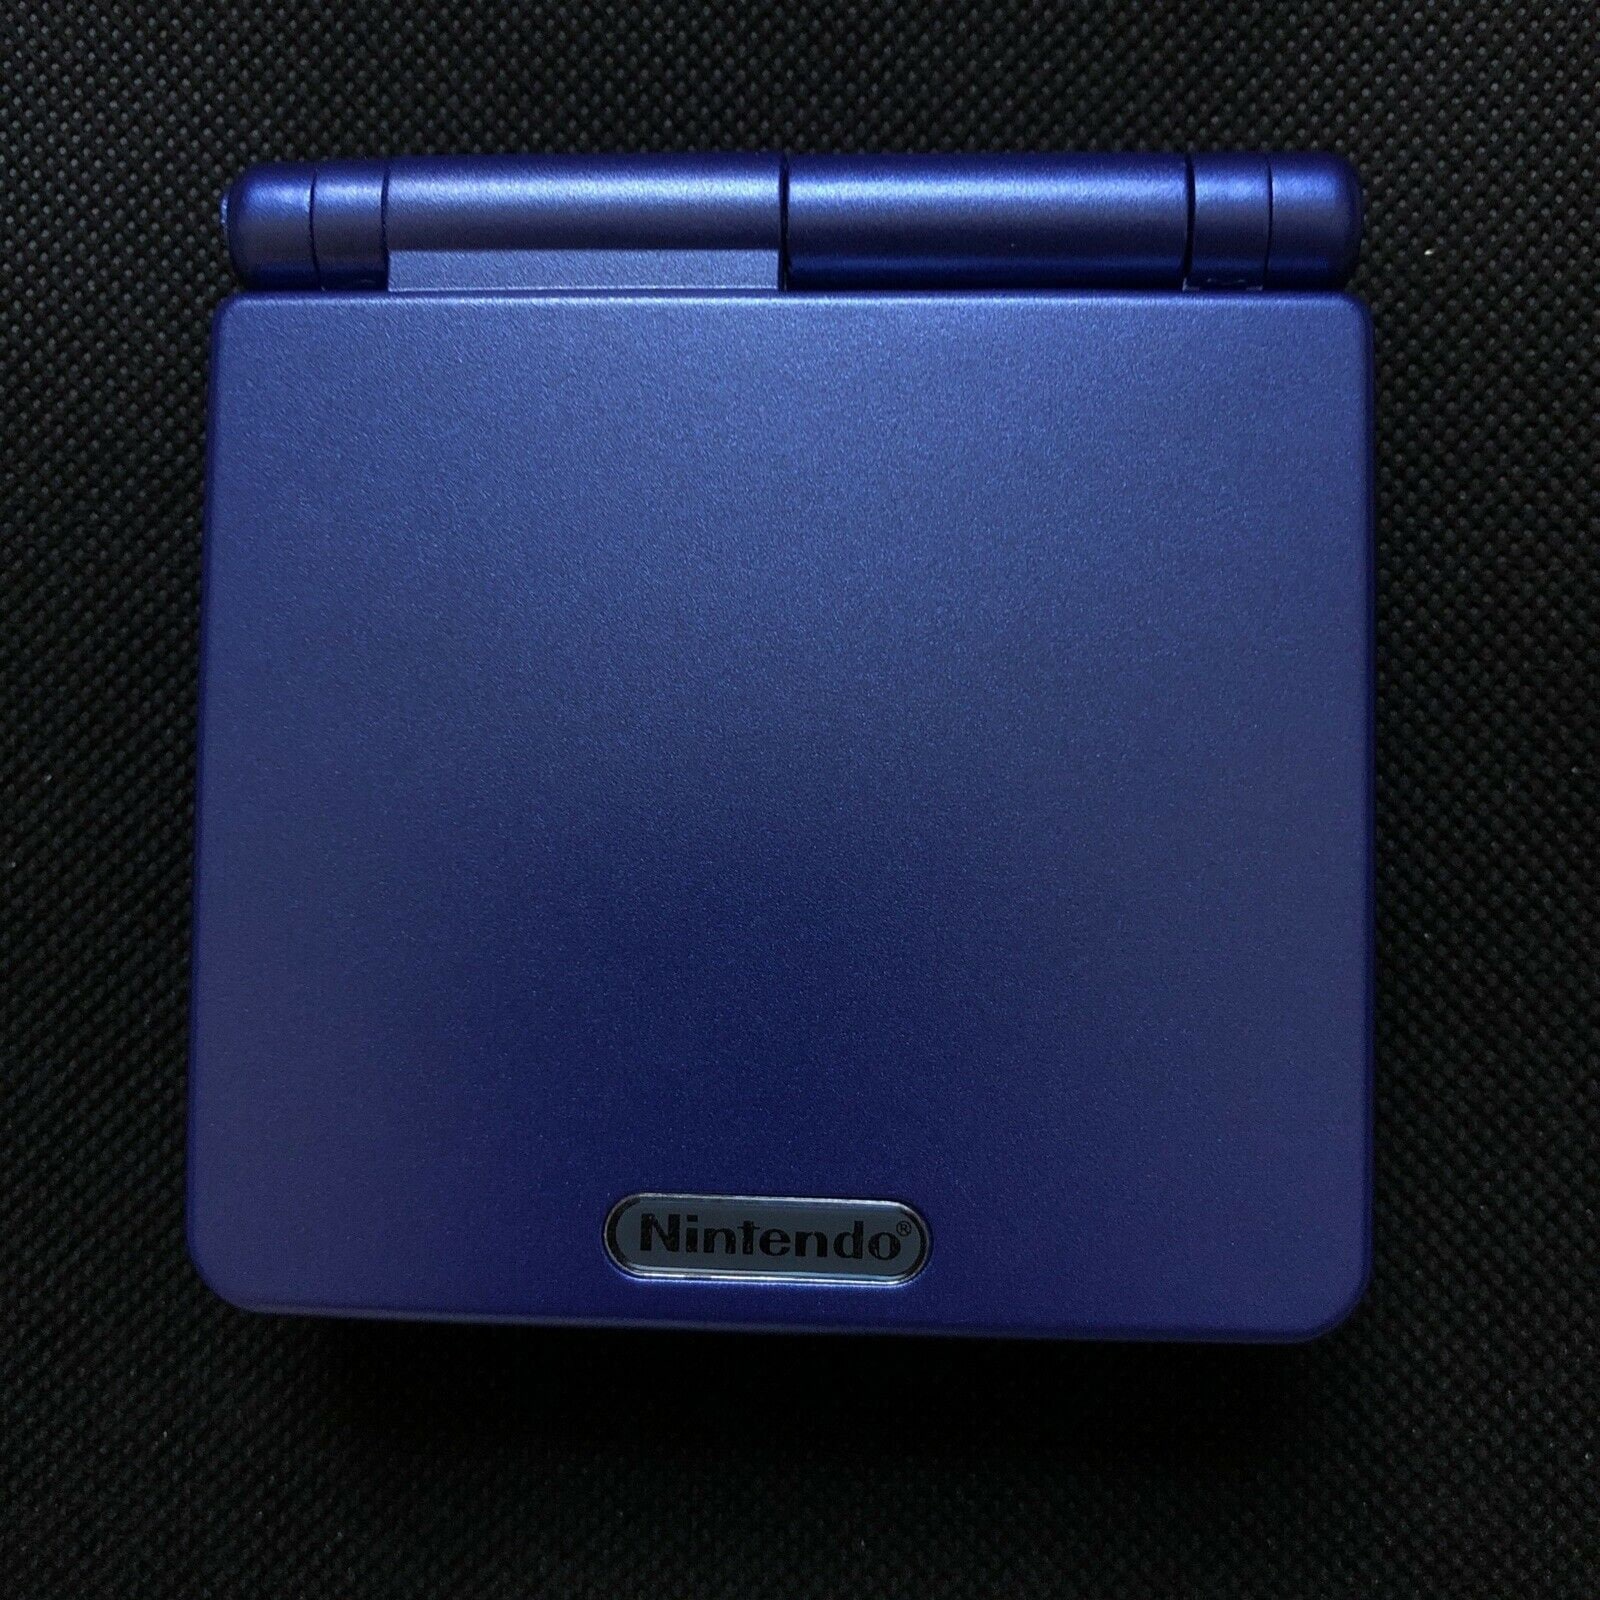 Buy Nintendo Game Boy Advance SP - Cobalt (Renewed) Online at